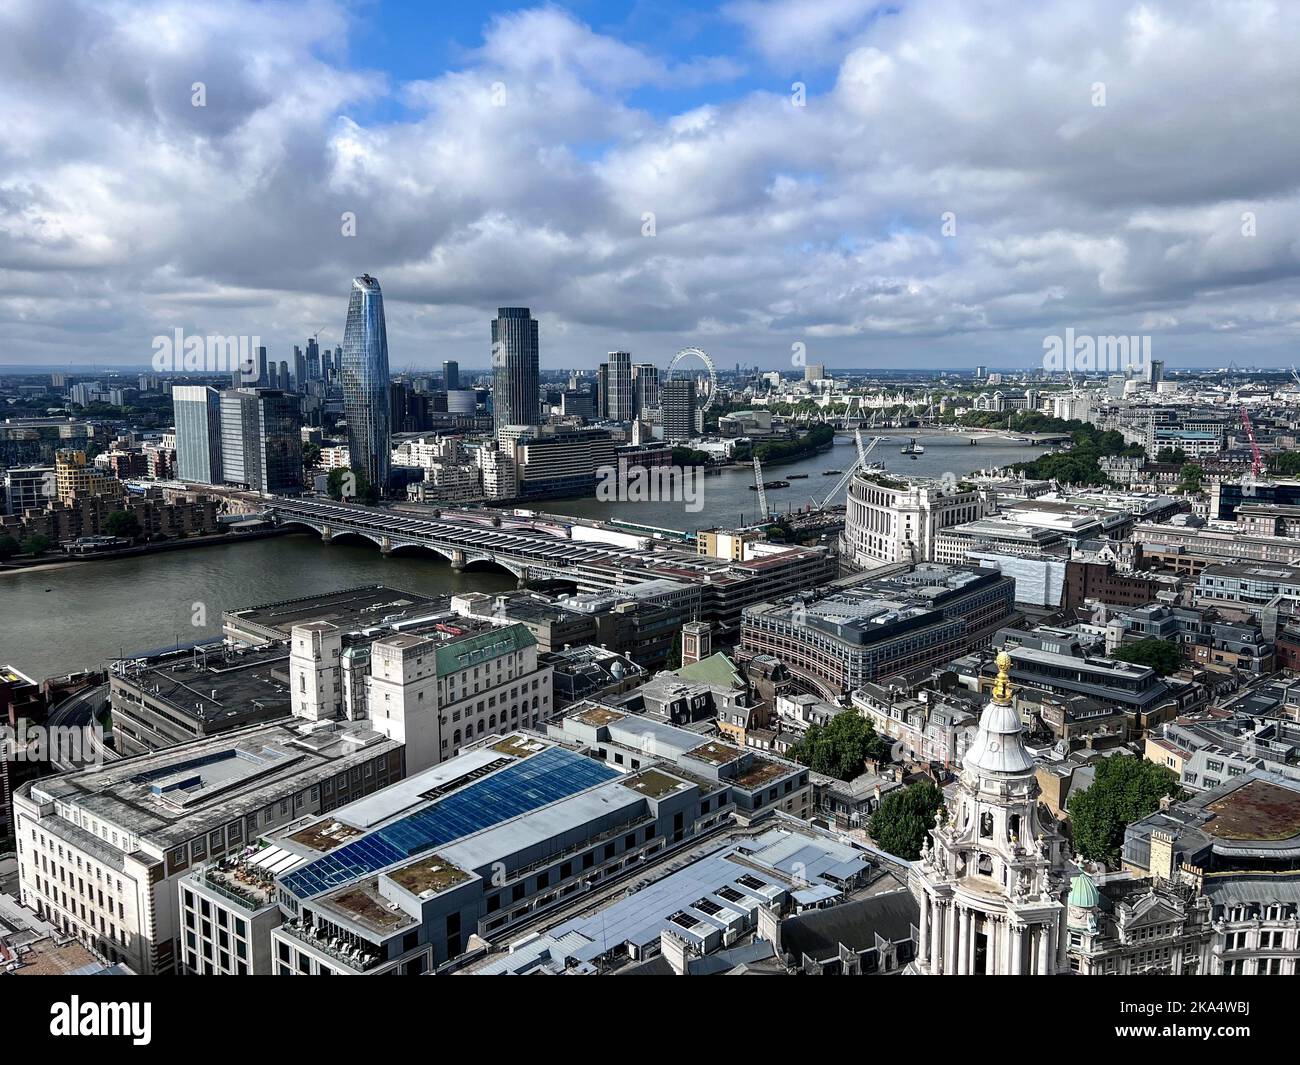 Aerial view of city skyline with Blackfriars bridge, the London Eye, London, England, UK Stock Photo